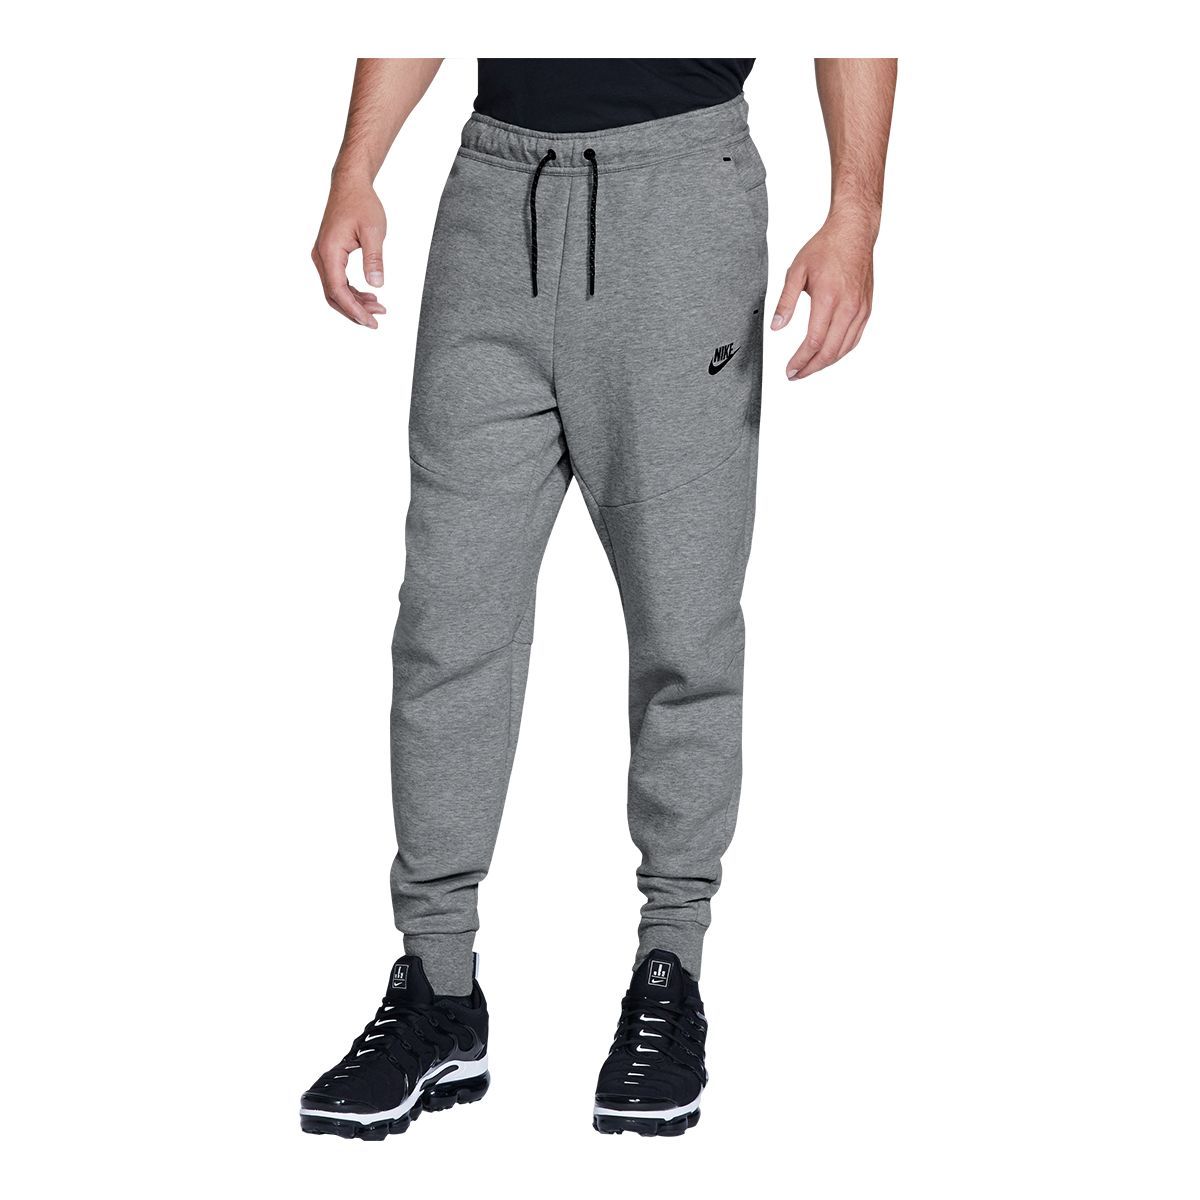 Nike Men's Tech Sweatpants, Fleece, Workout, Lightweight, Tapered